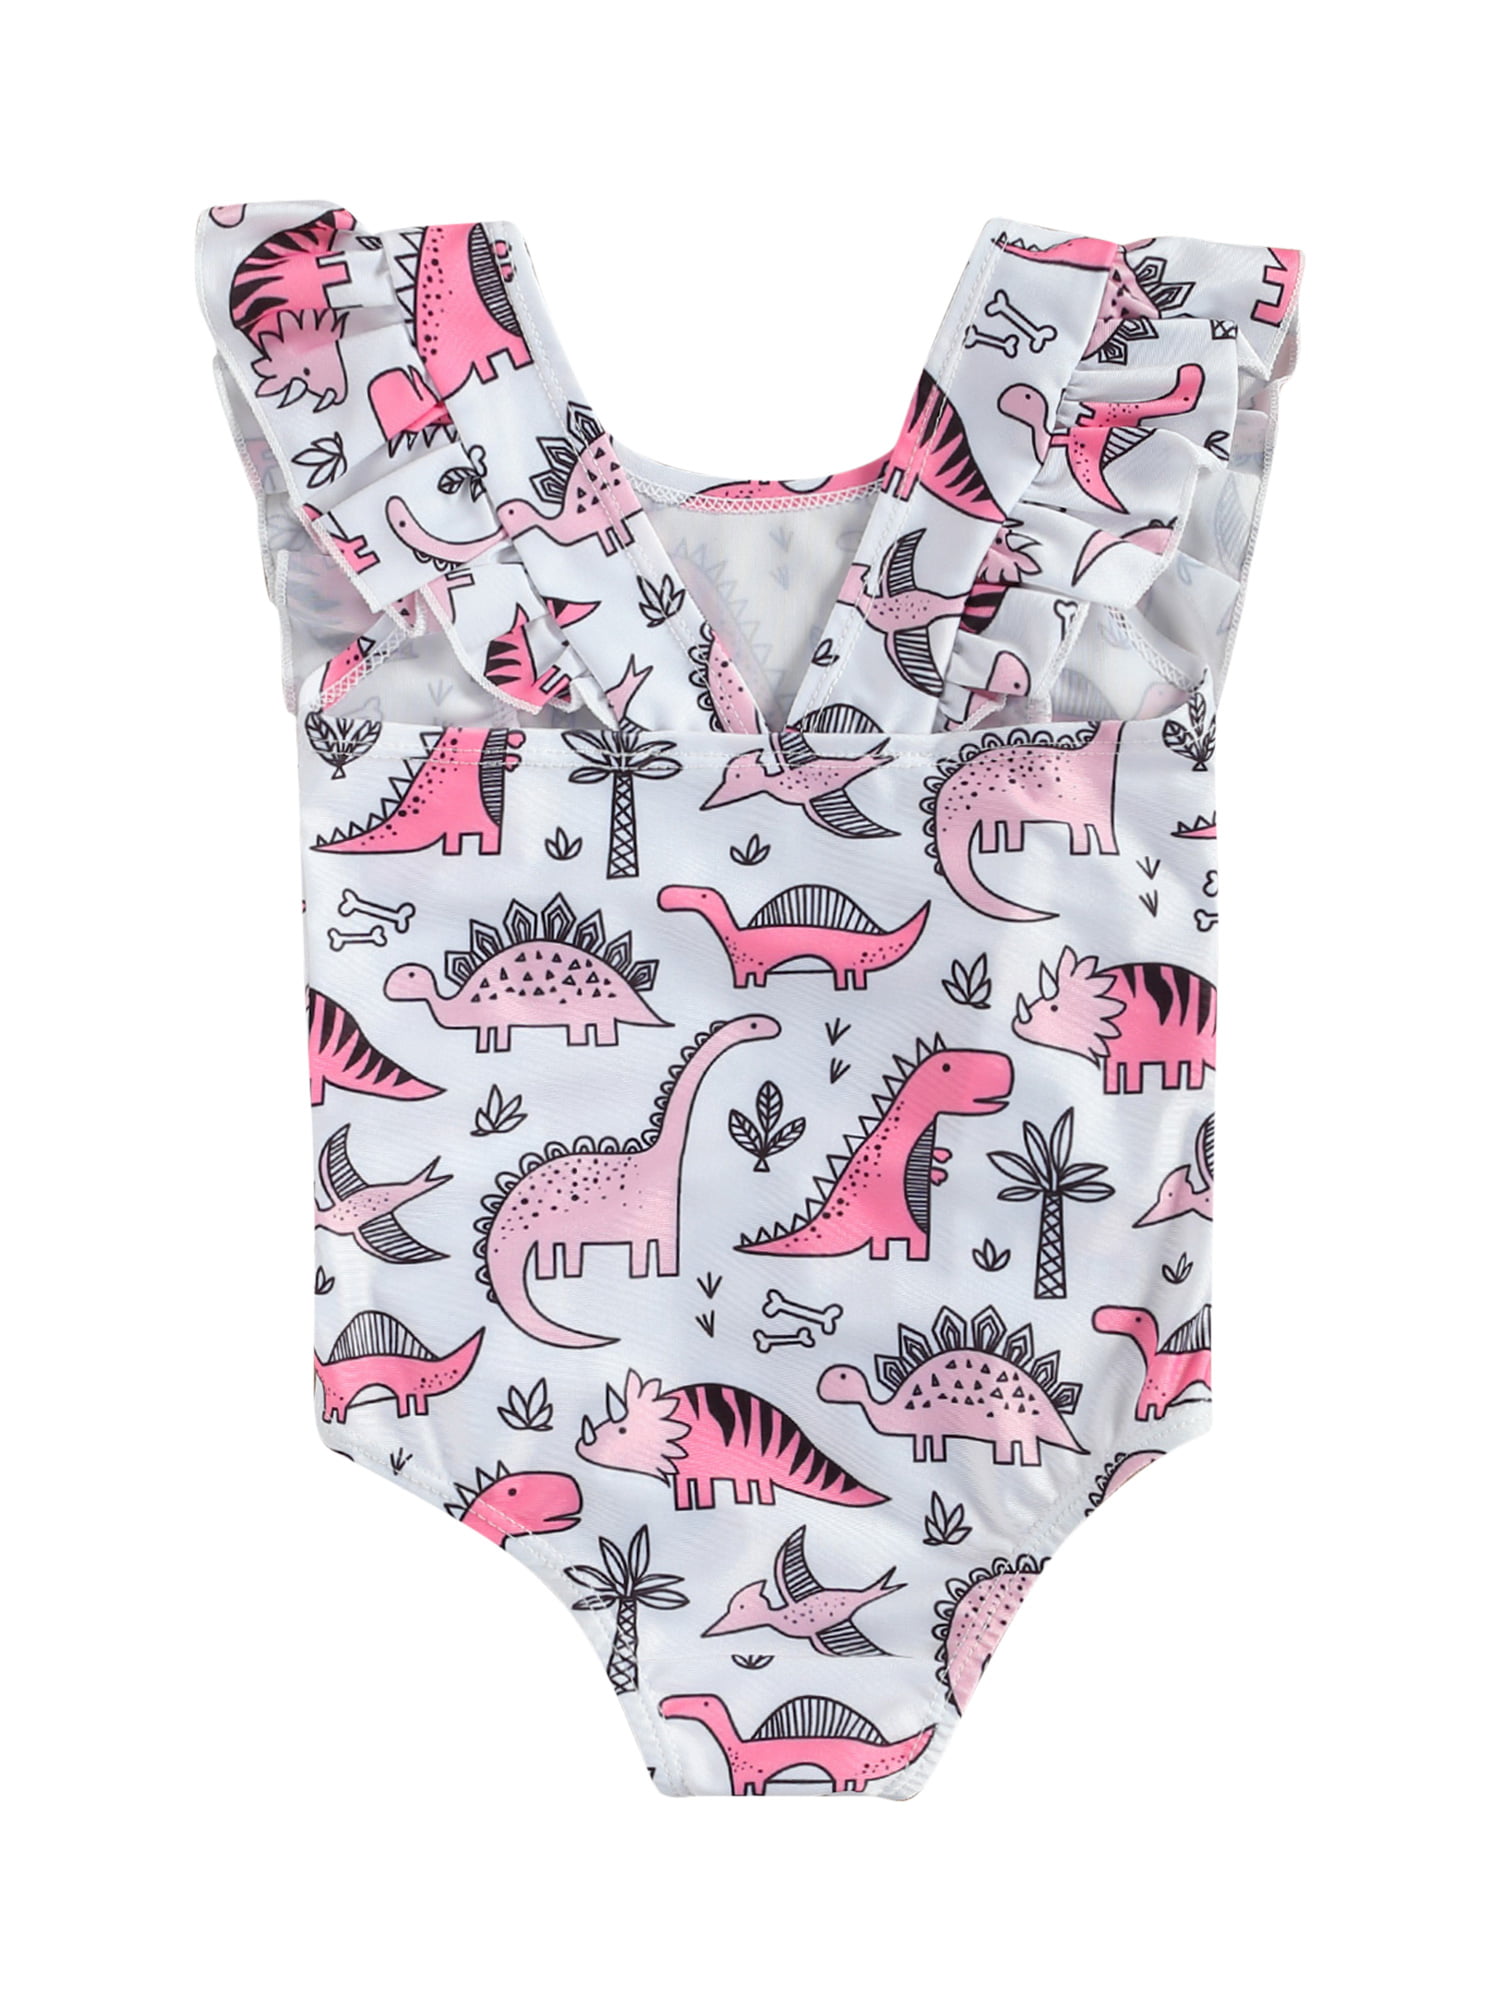 Merqwadd Toddler Baby Girls Cute Fashion Ruffle Swimsuit Kids Bathing Suit Beachwear 